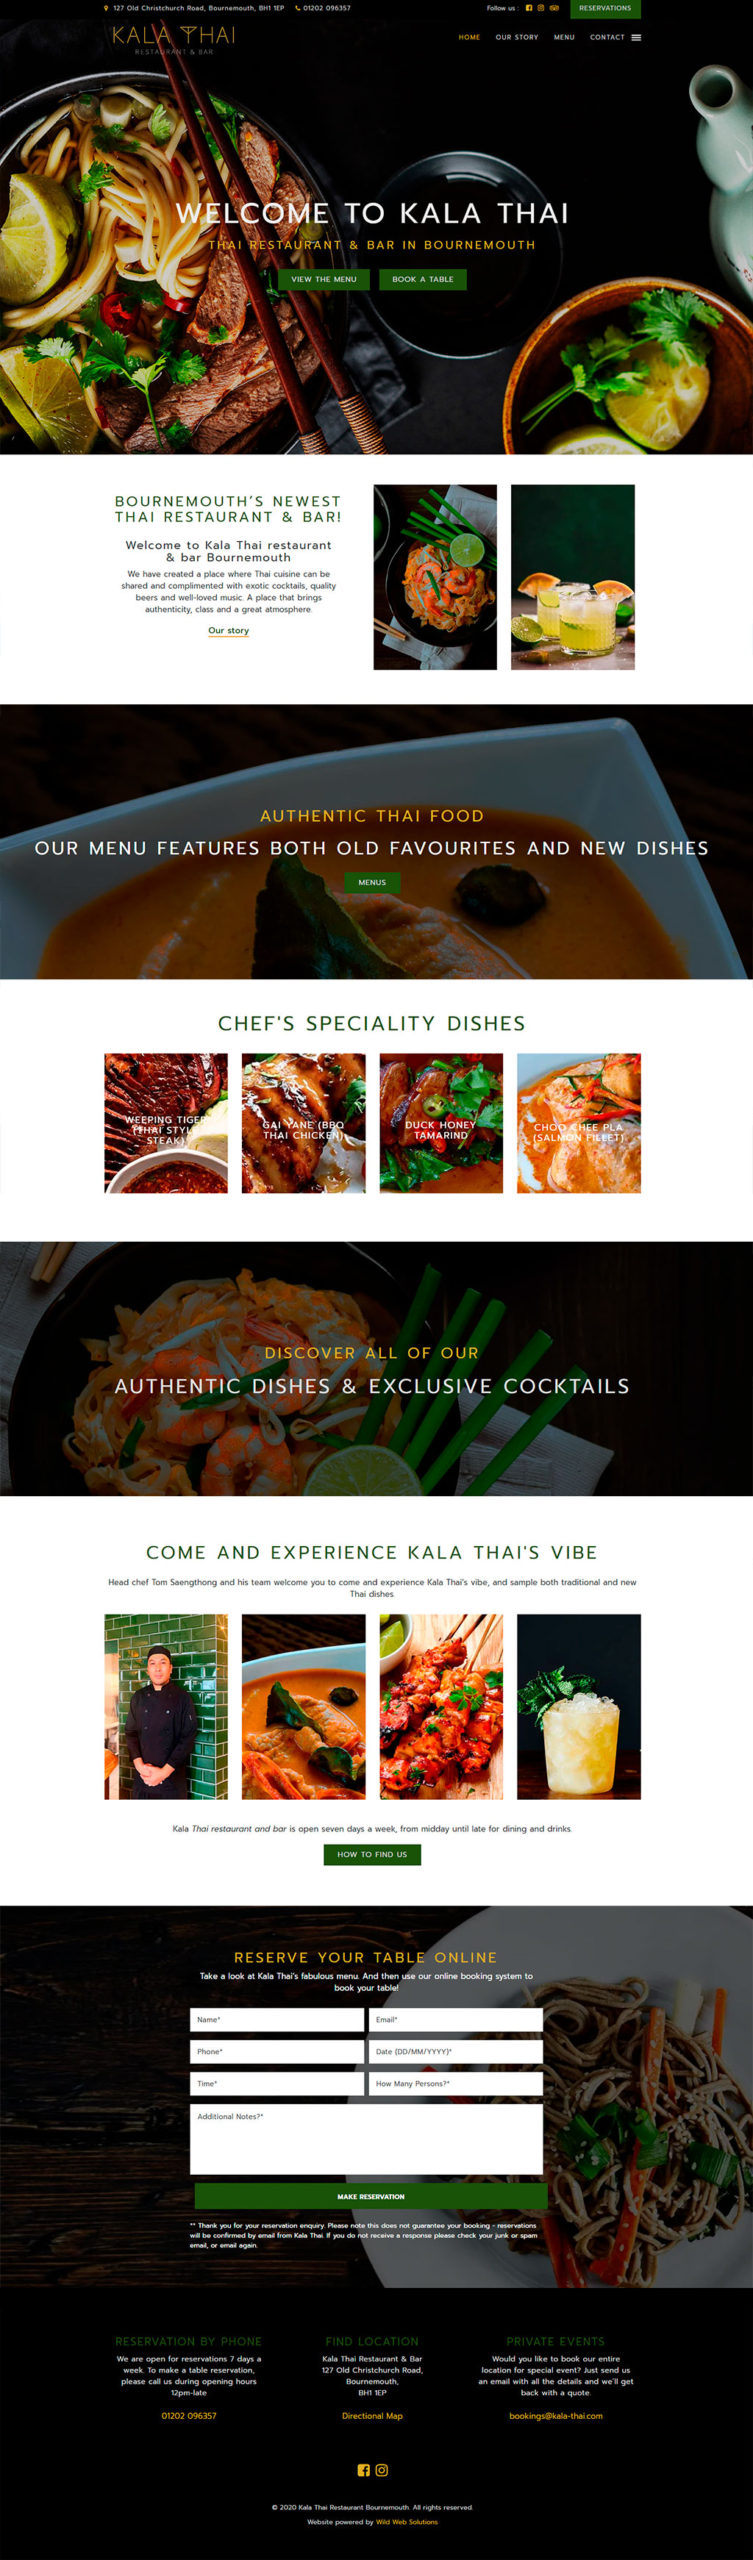 Kala Thai restaurant website design